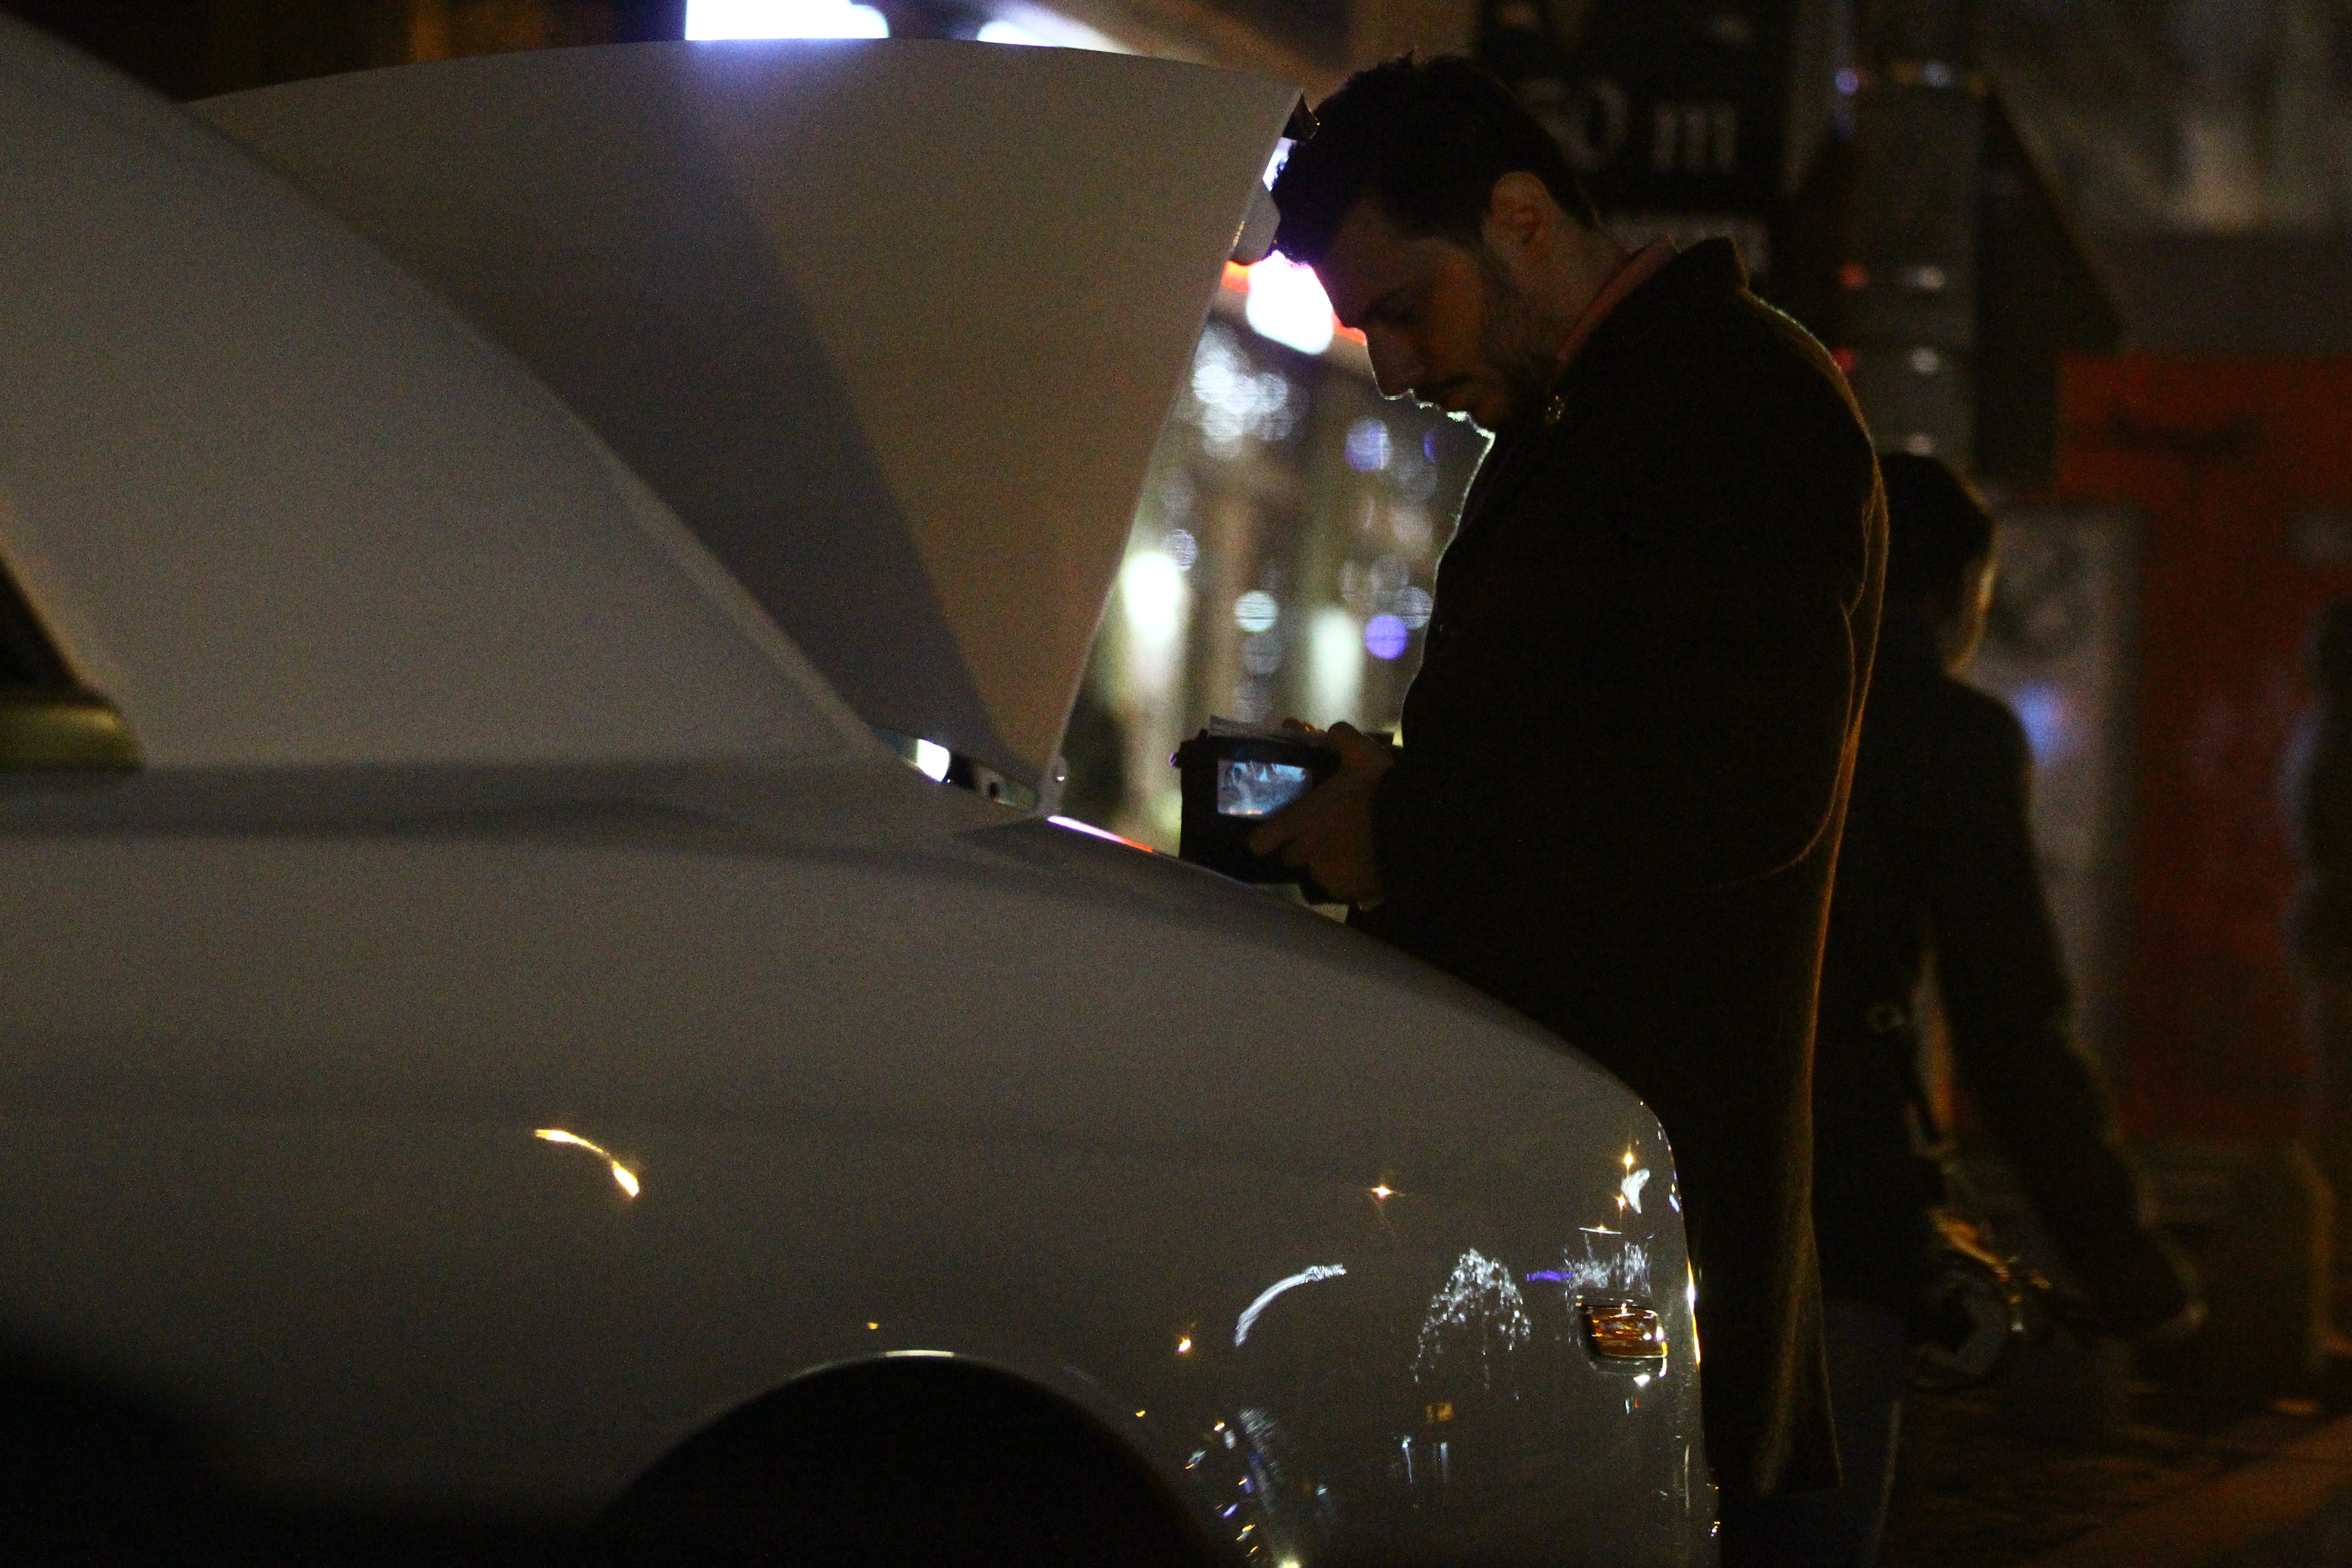 Inainte de a merge in restaurant, Dan Nicorescu jr umbla in portbagajul masinii sale de unde ia o suma de bani